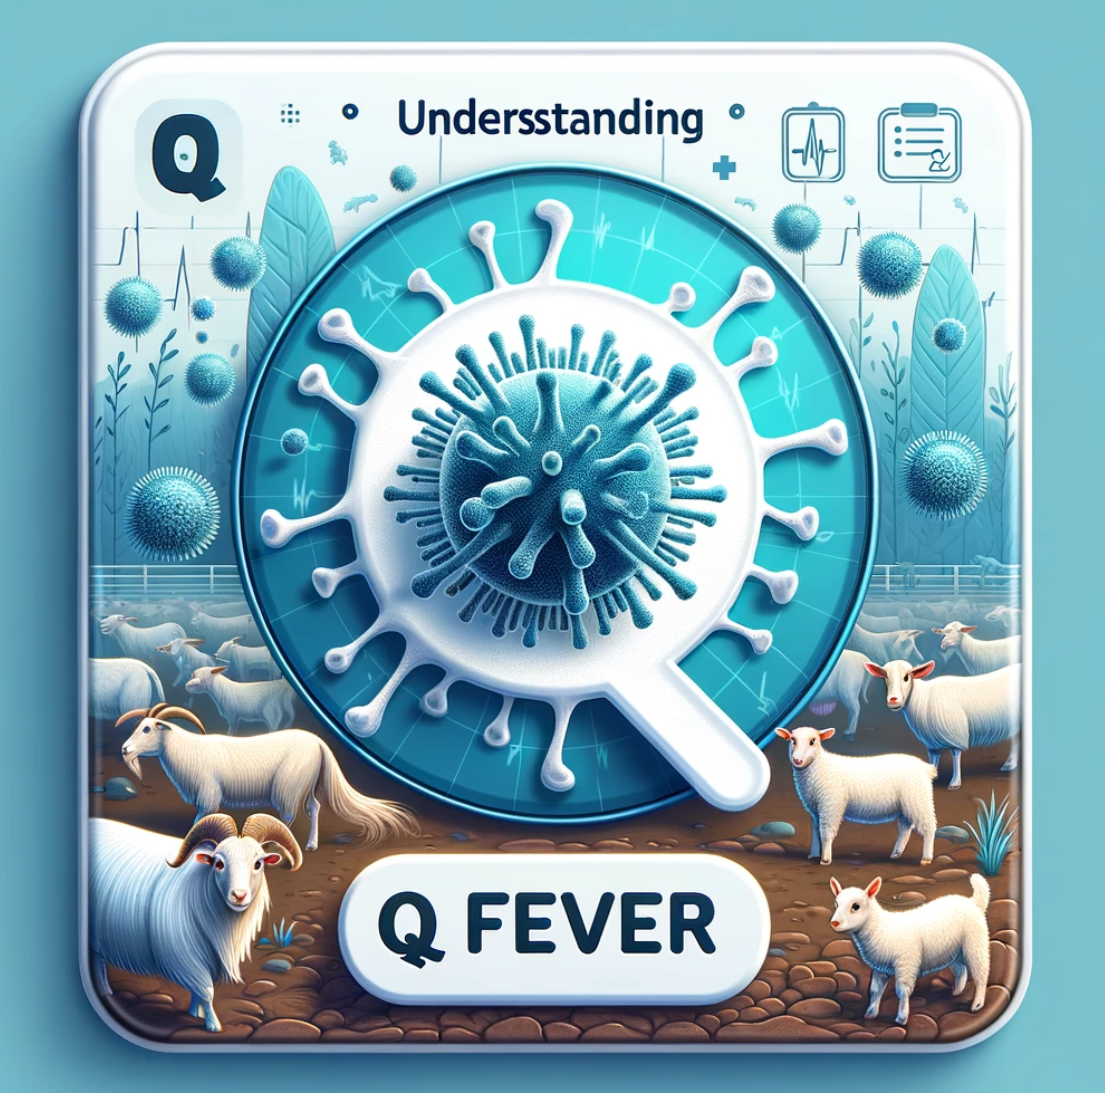 Q열(Q fever)